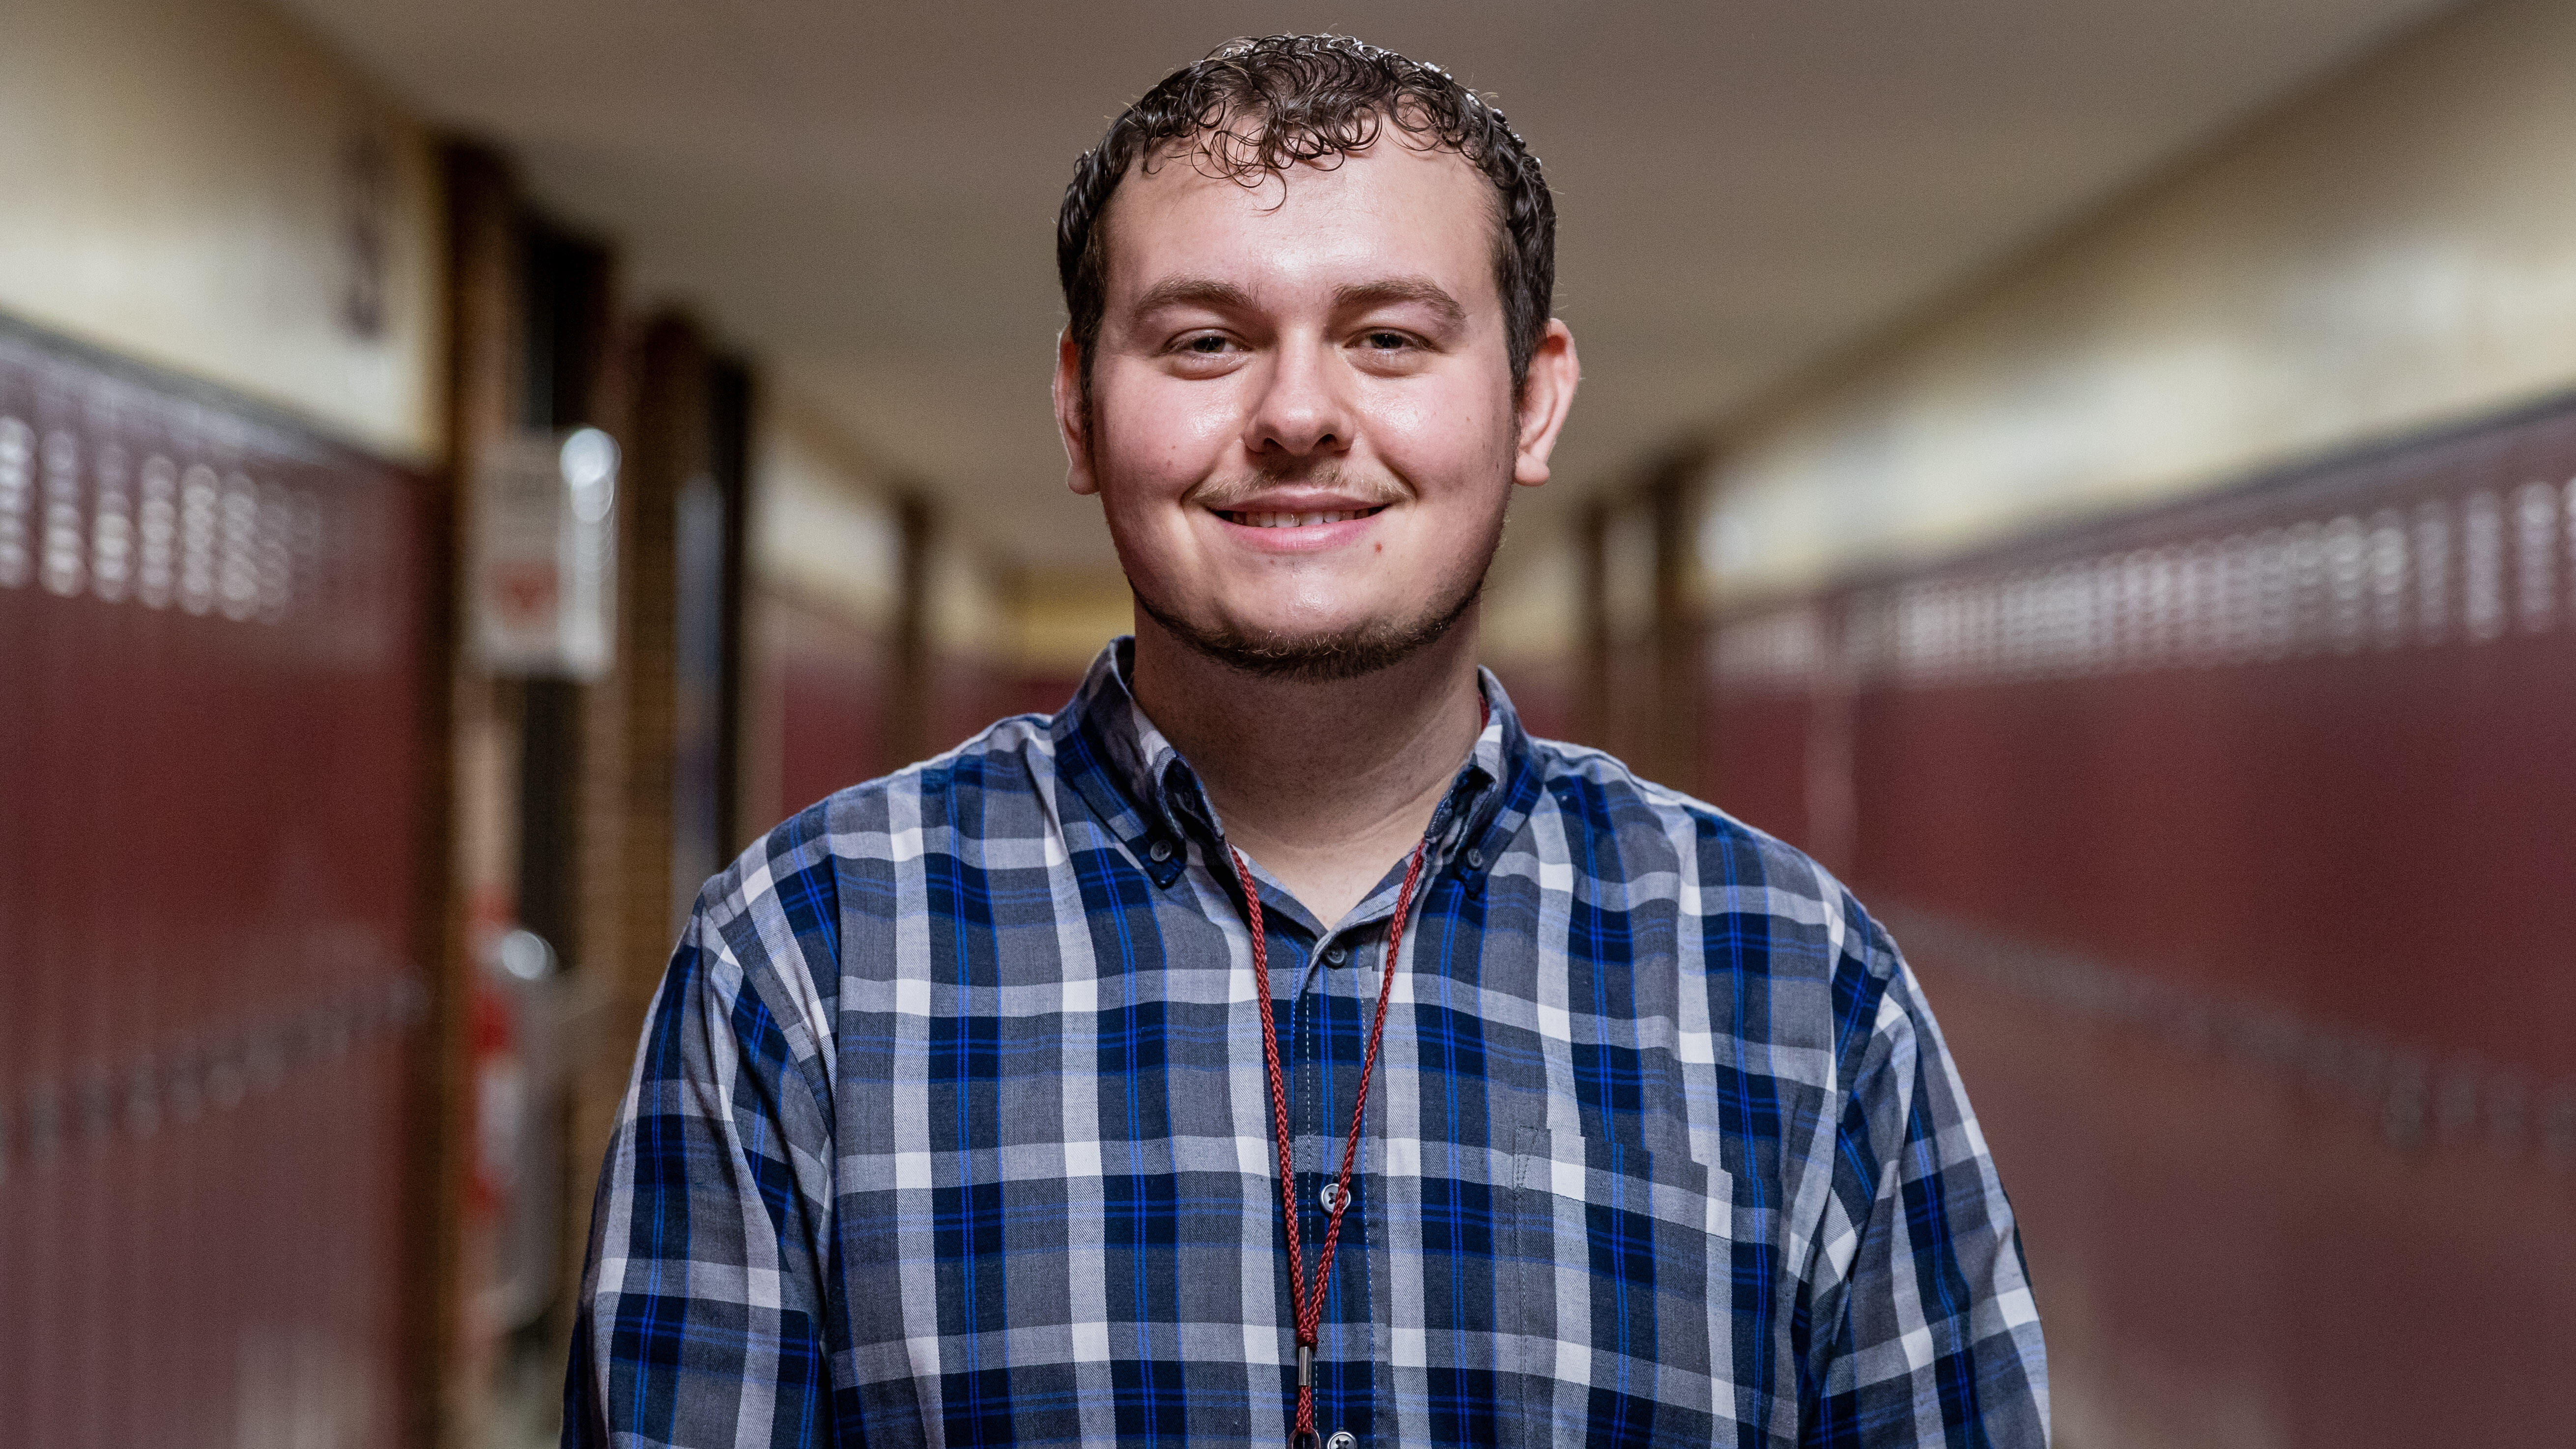 Special education teacher Austin Riley poses in the high school hallway